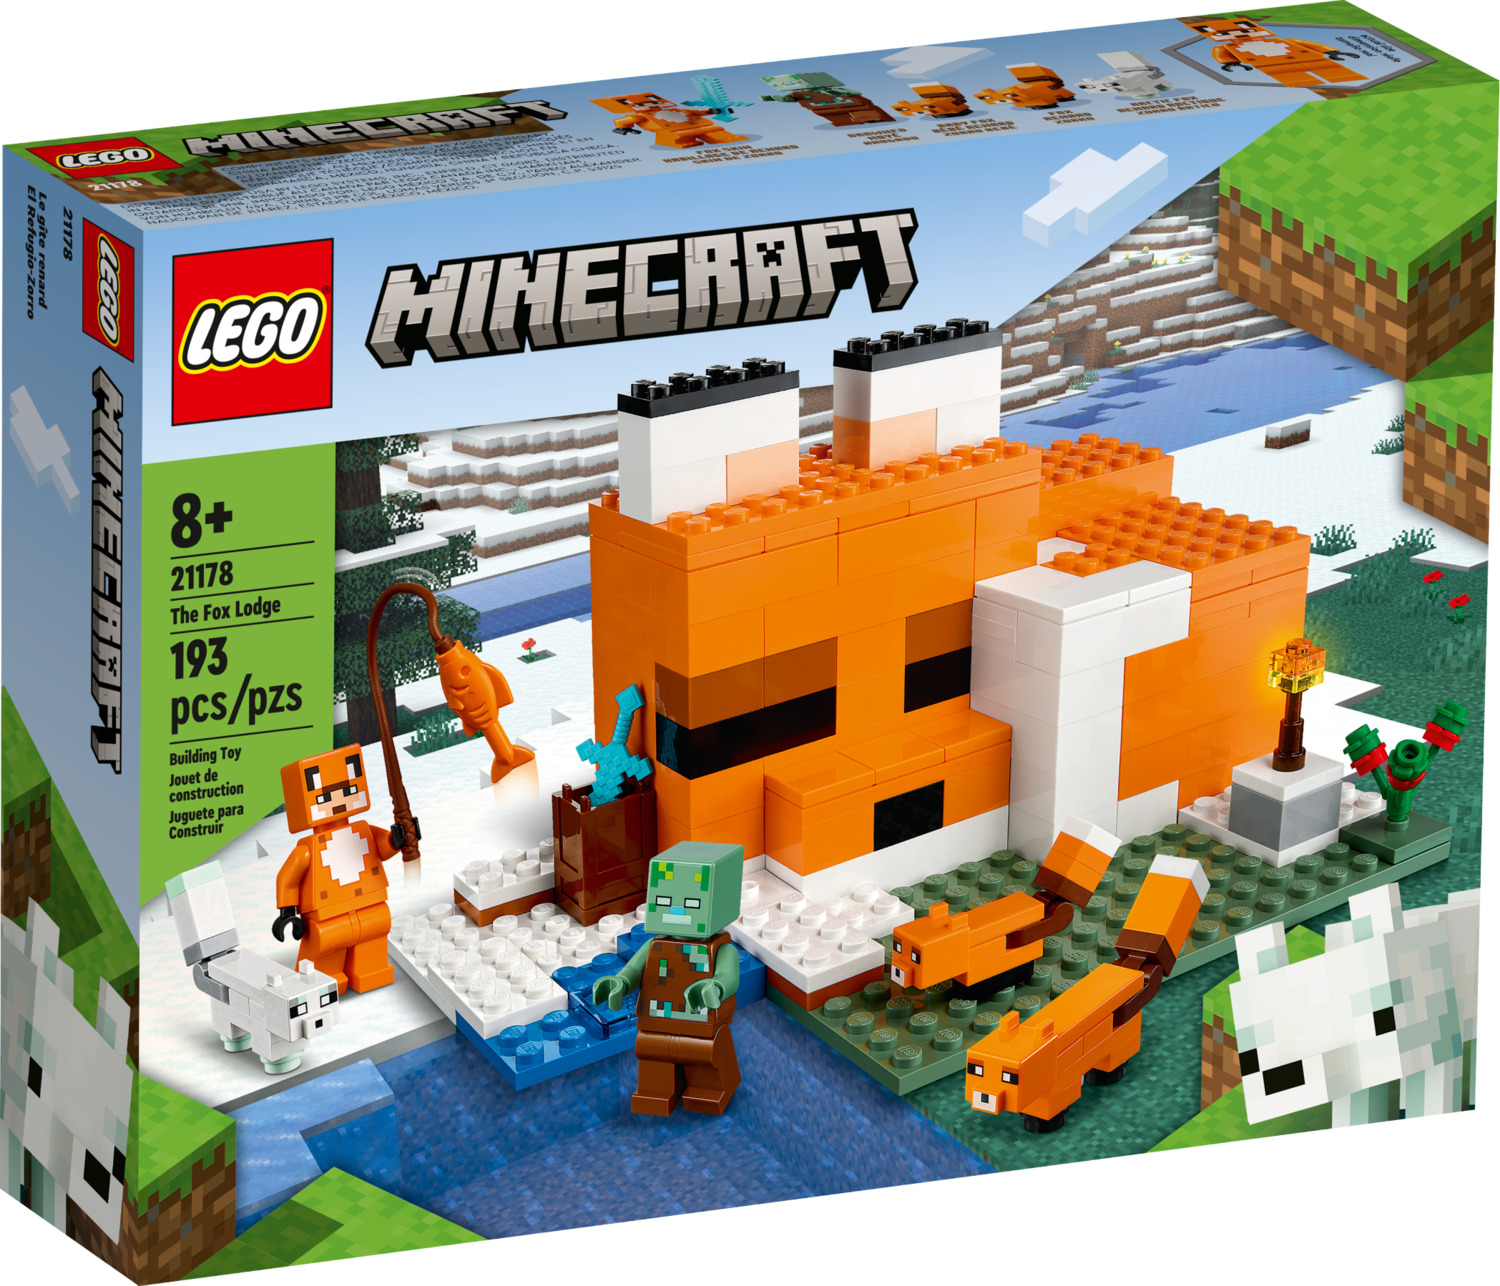 LEGO Minecraft: The Fox Lodge - Imagination Toys